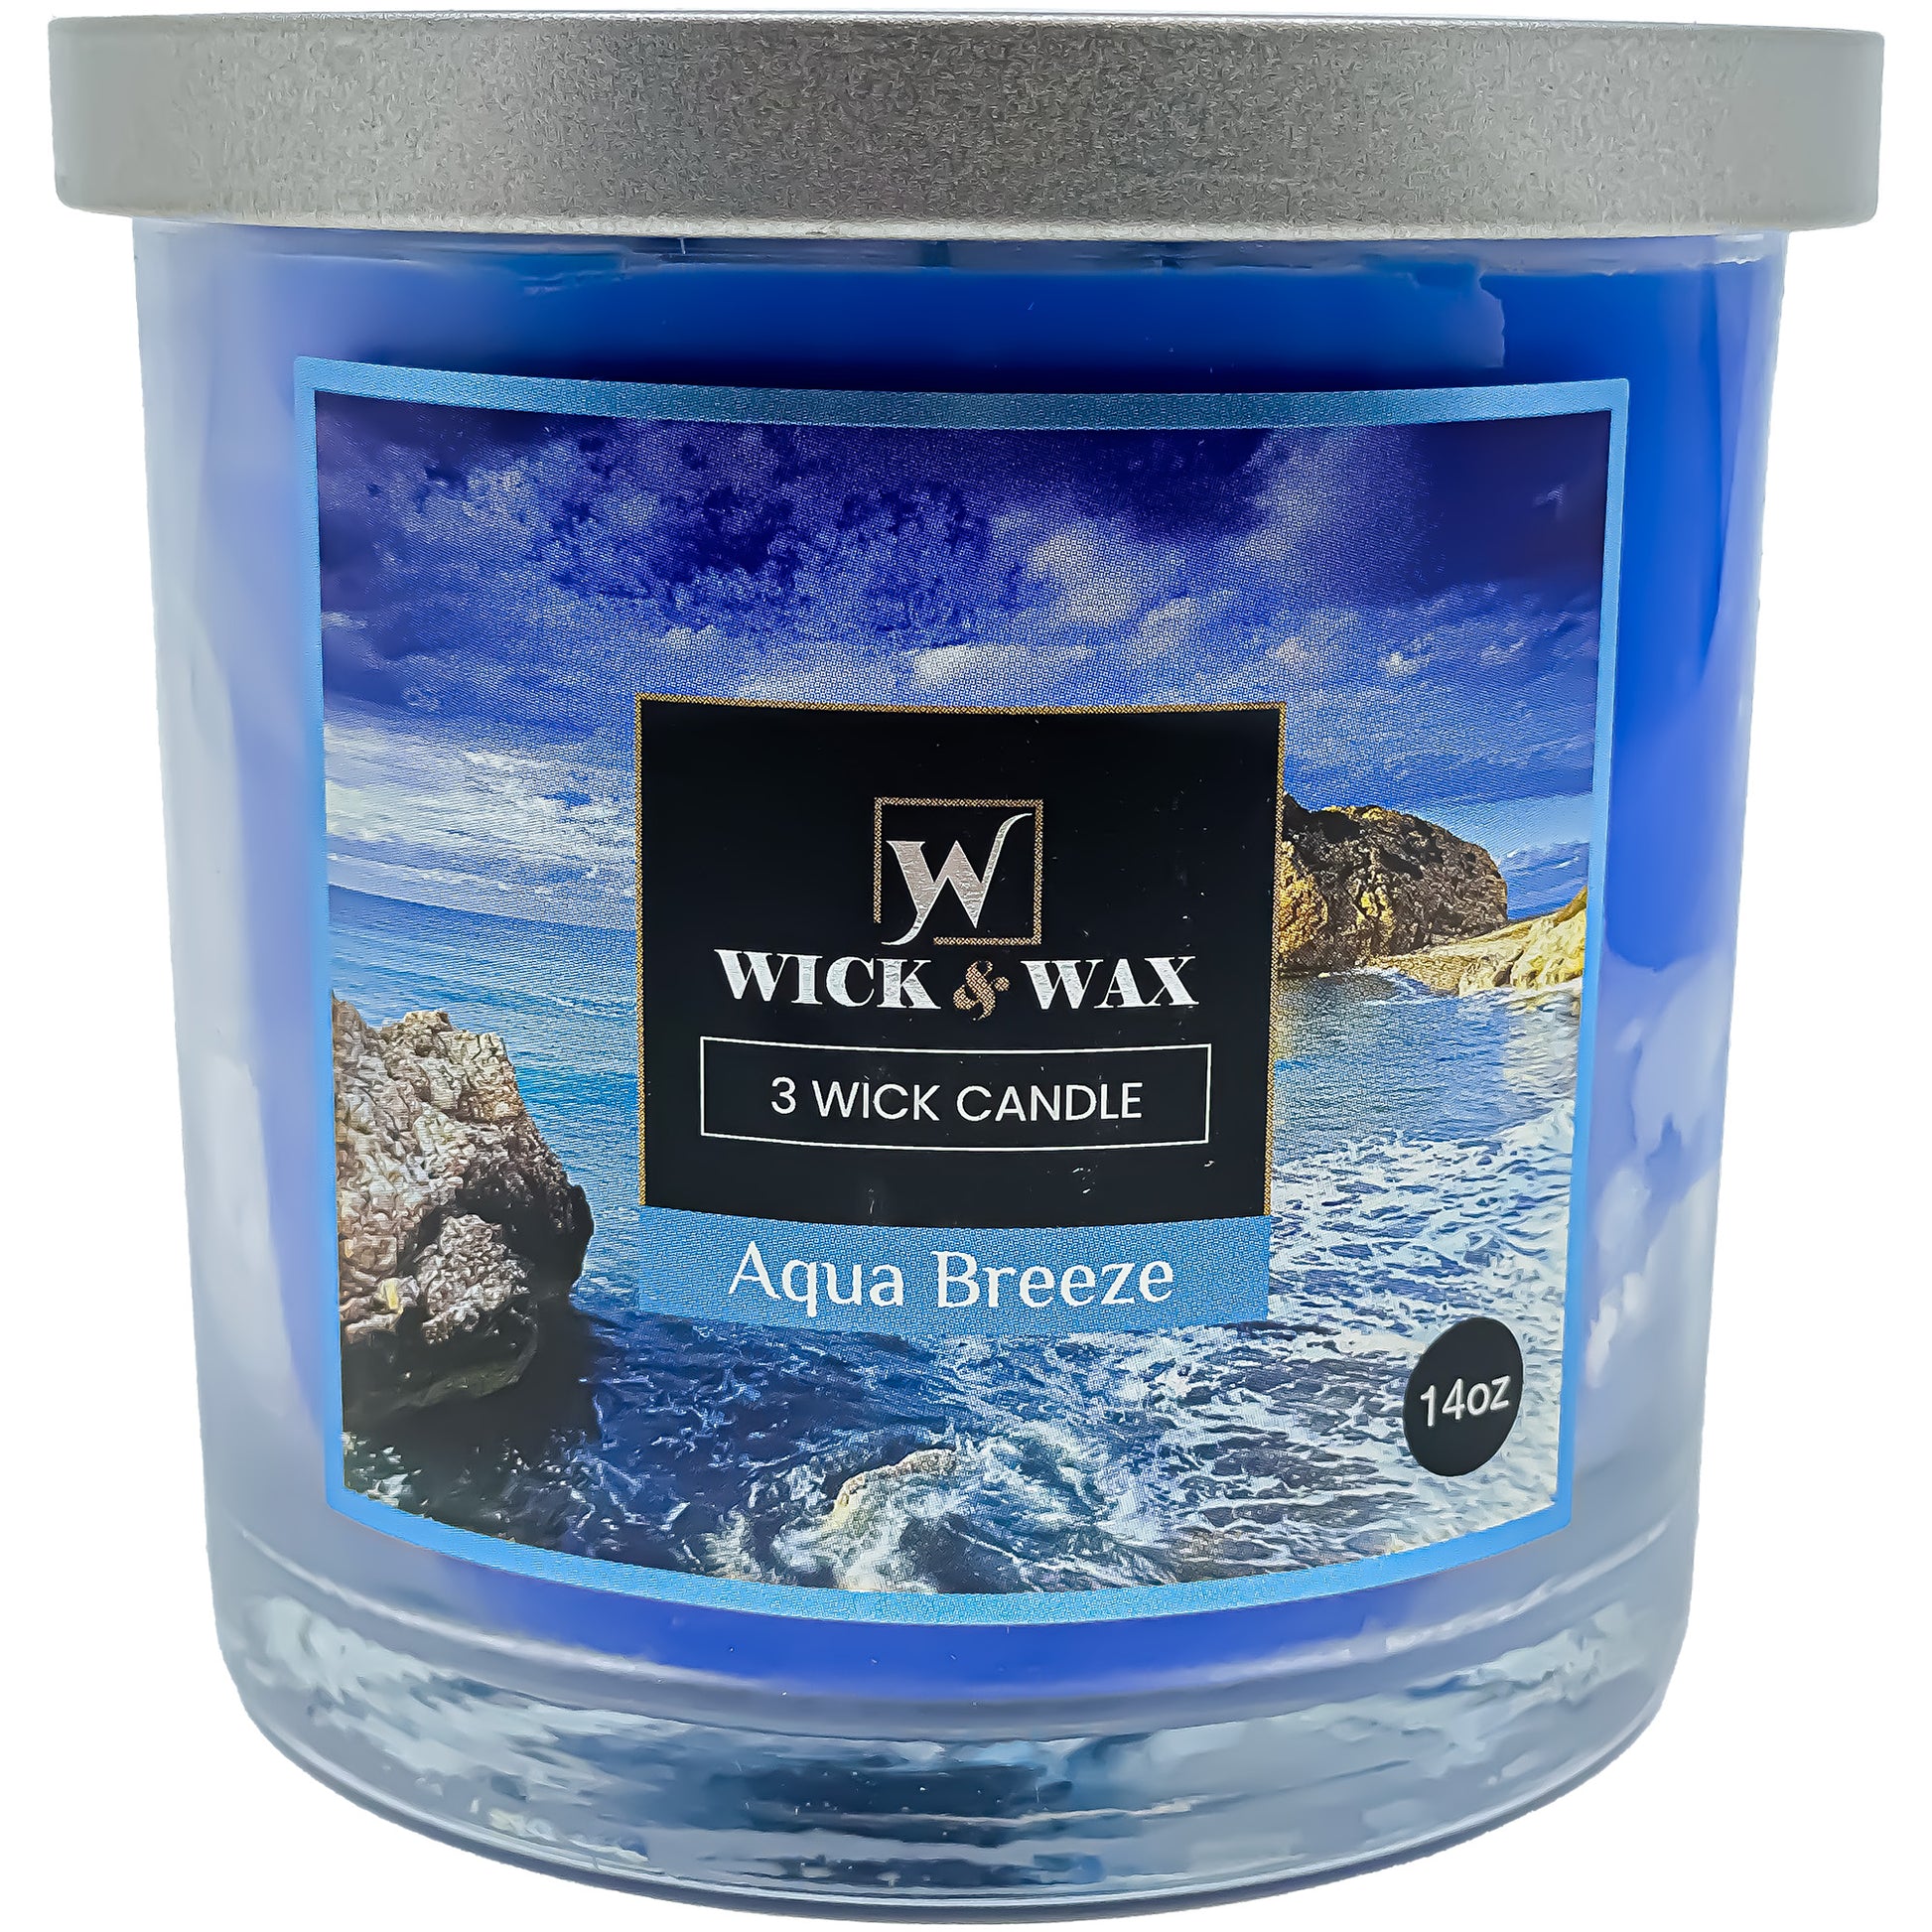 Aqua Breeze Scented Jar Candle (3-wick) - 14oz.  WICK & WAX   